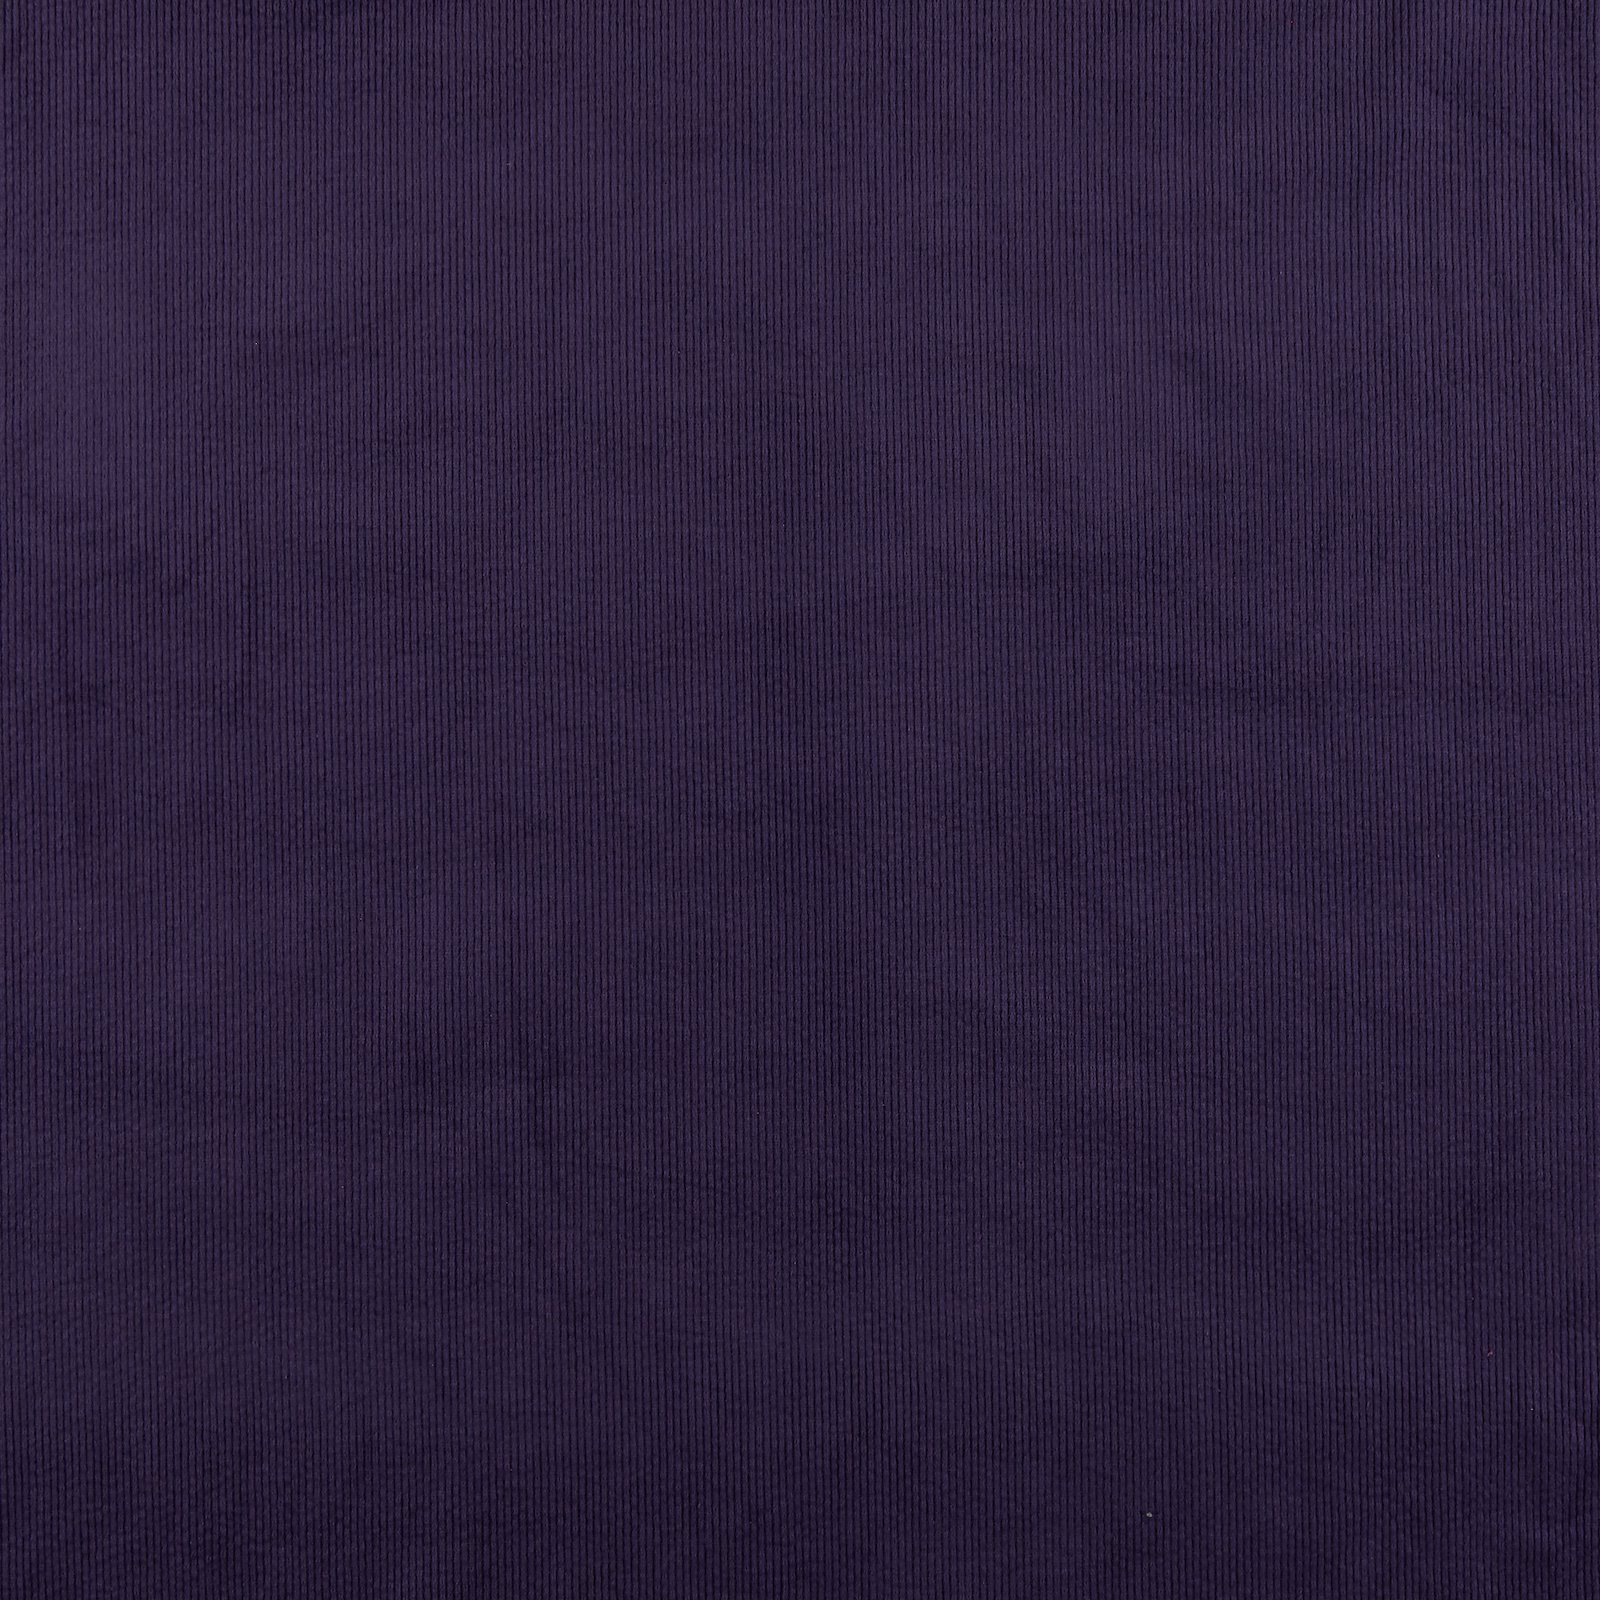 Corduroy 6 wales w stretch dark purple 430873_pack_solid